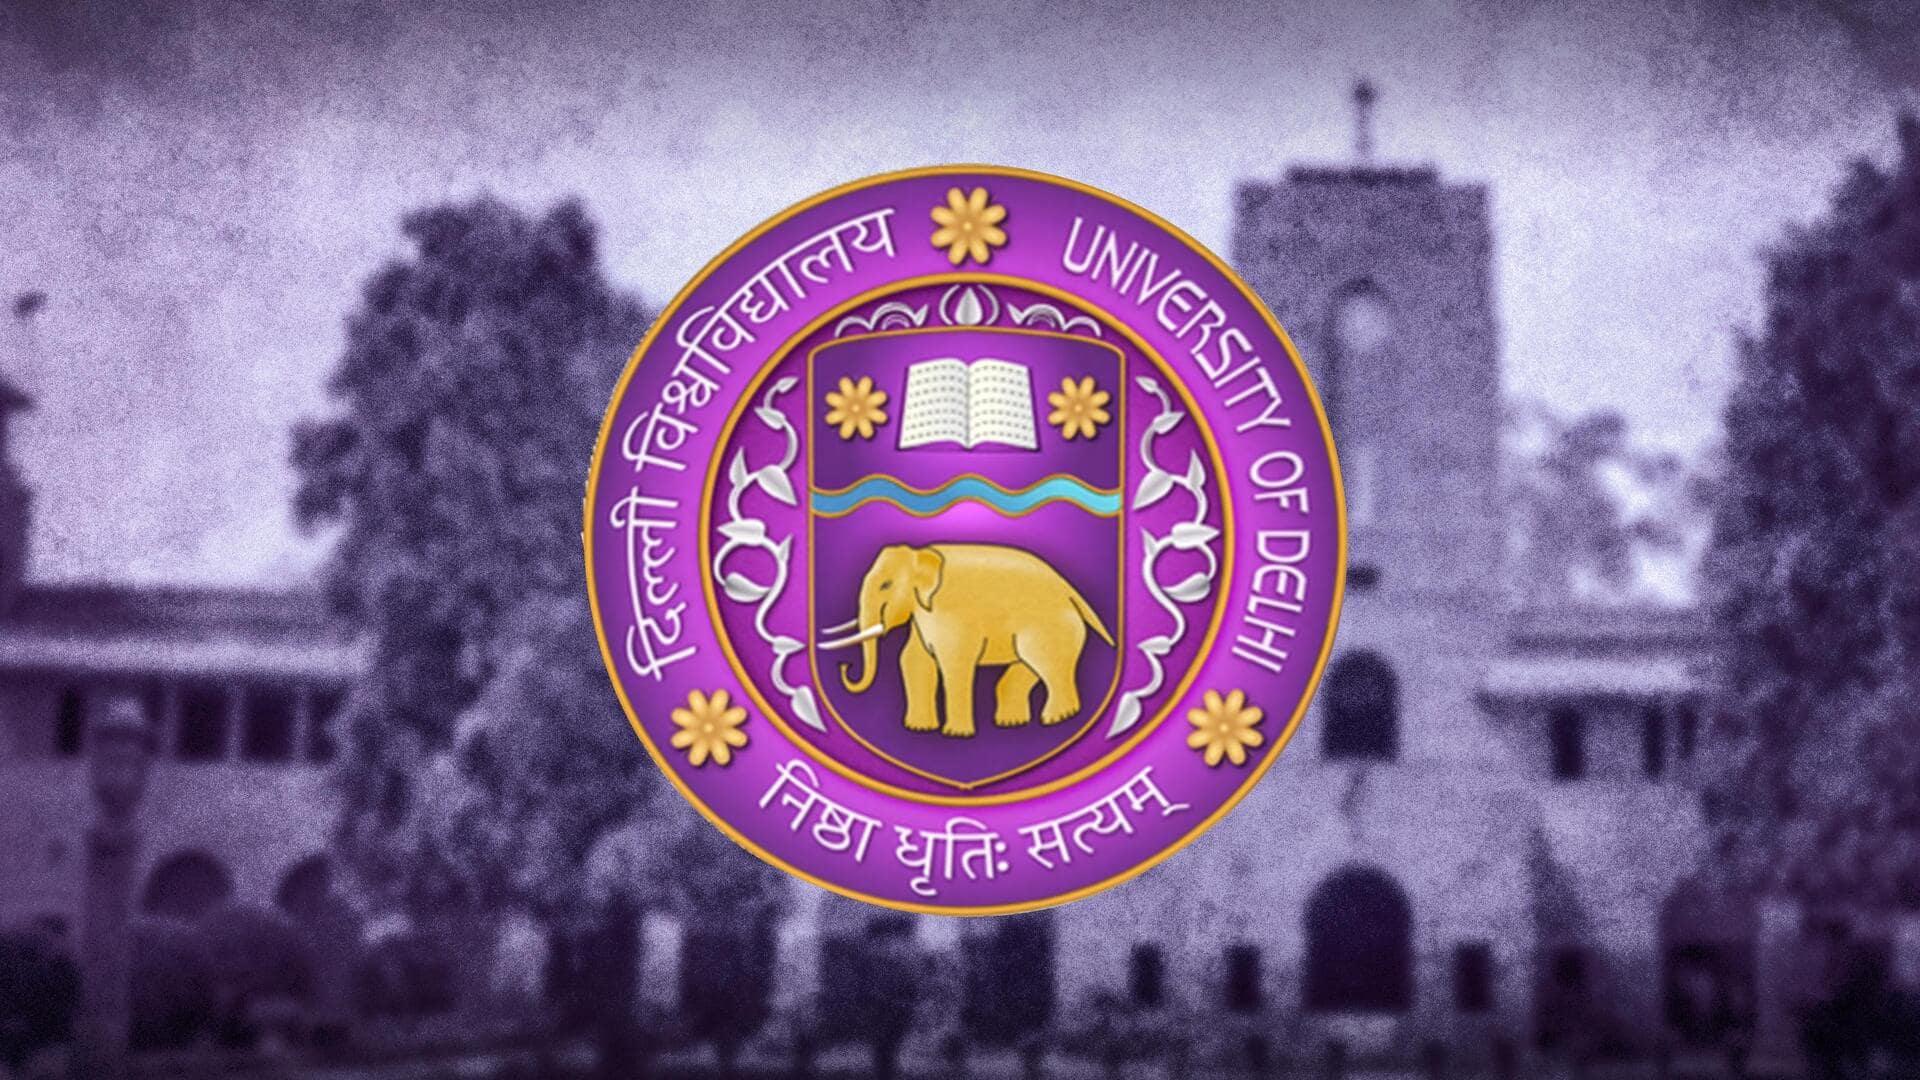 Top courses at Delhi University for humanities/arts students